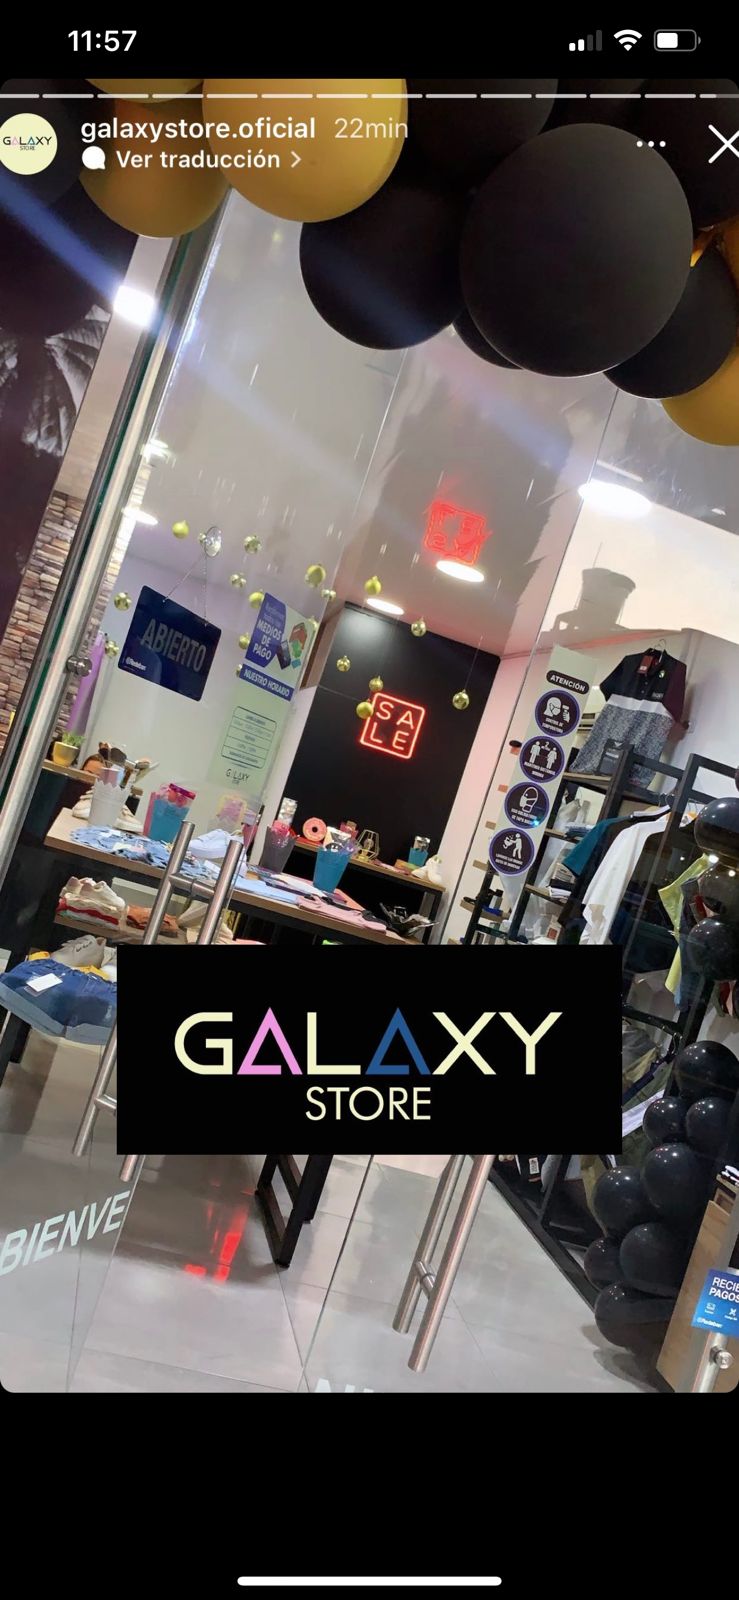 Galaxy Store Arauca